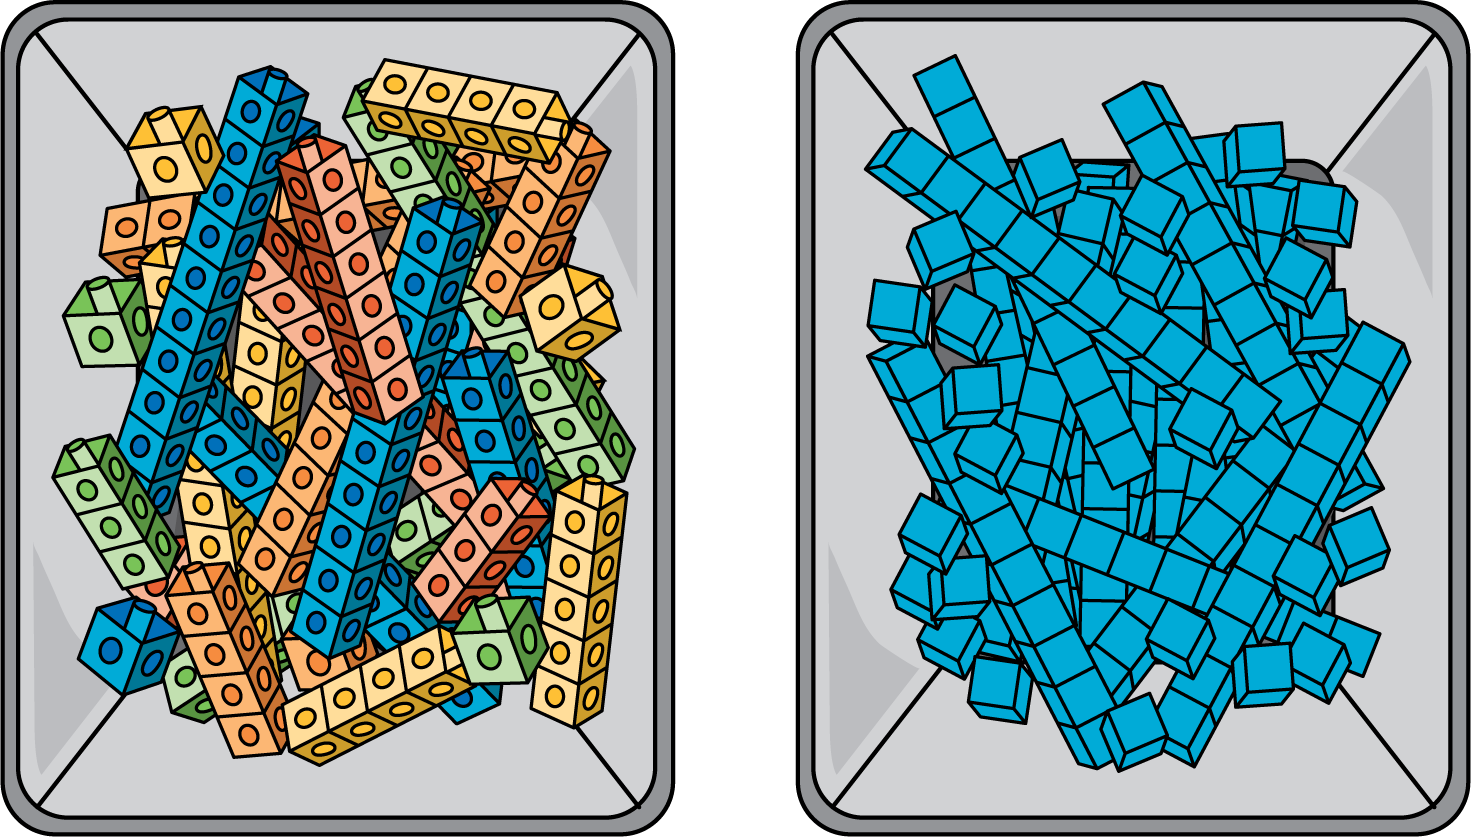 1 bin of connecting cubes. 1 bin of base ten blocks.